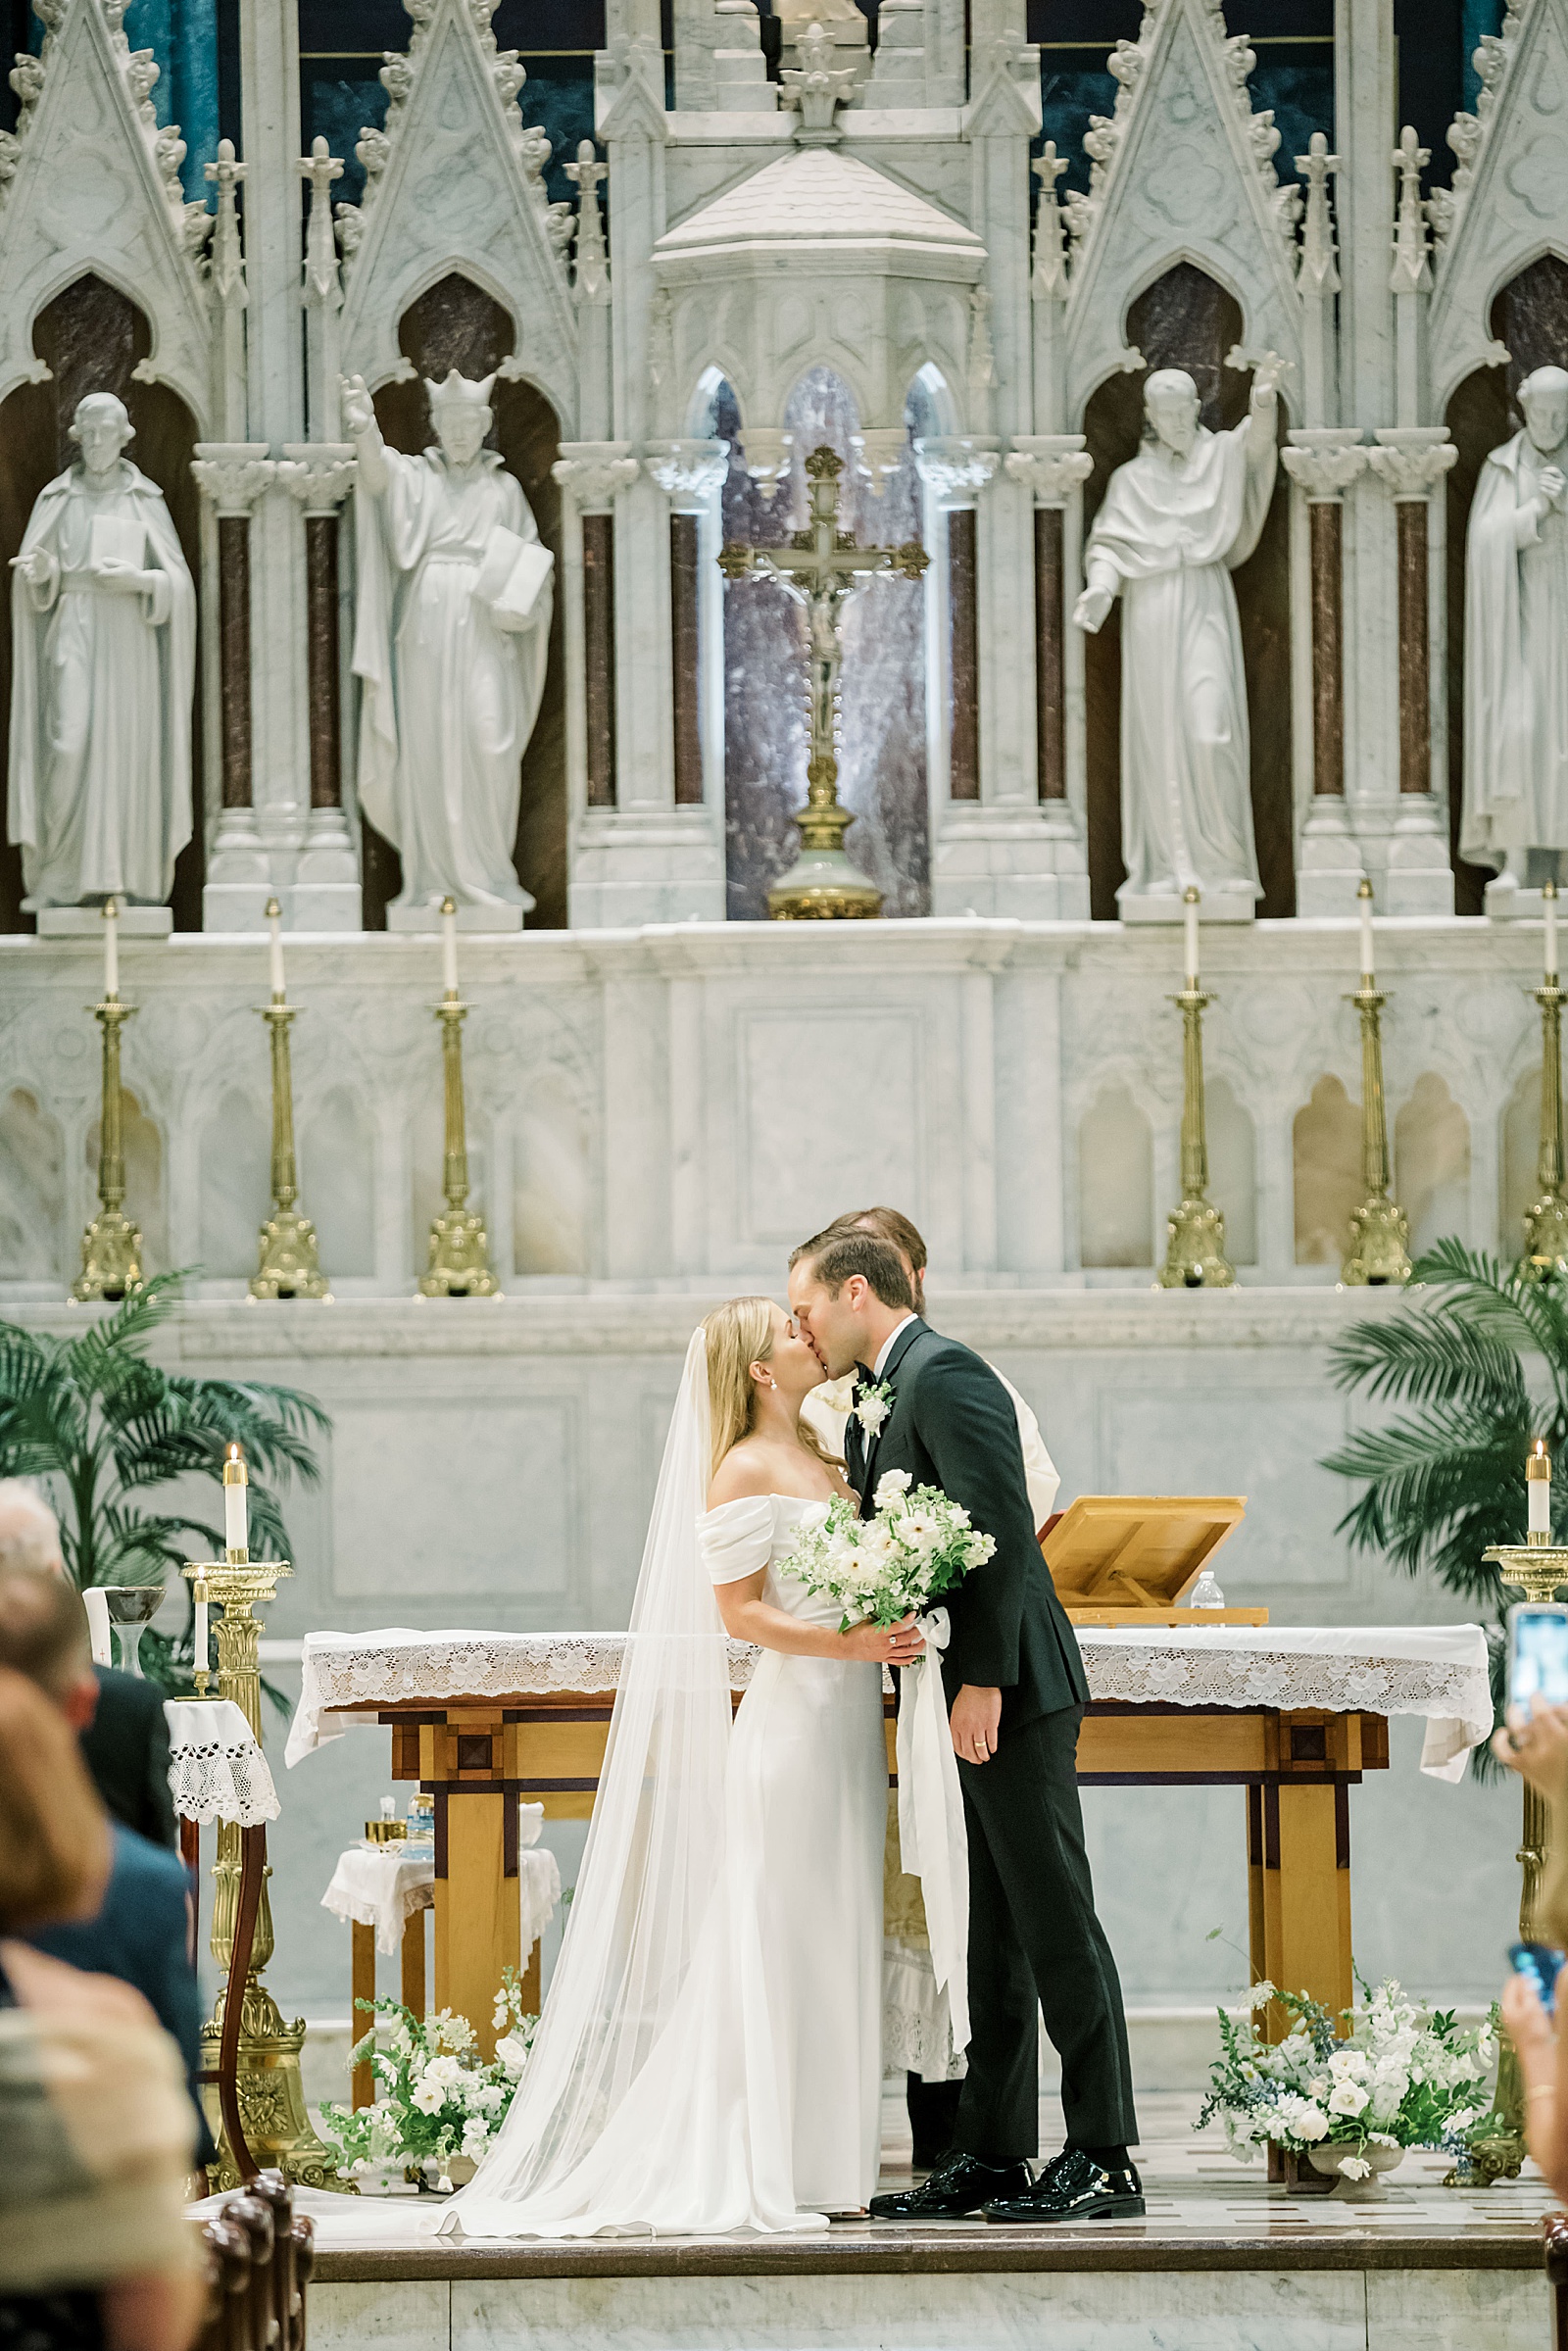 First Kiss at Cincinnati Wedding Ceremony